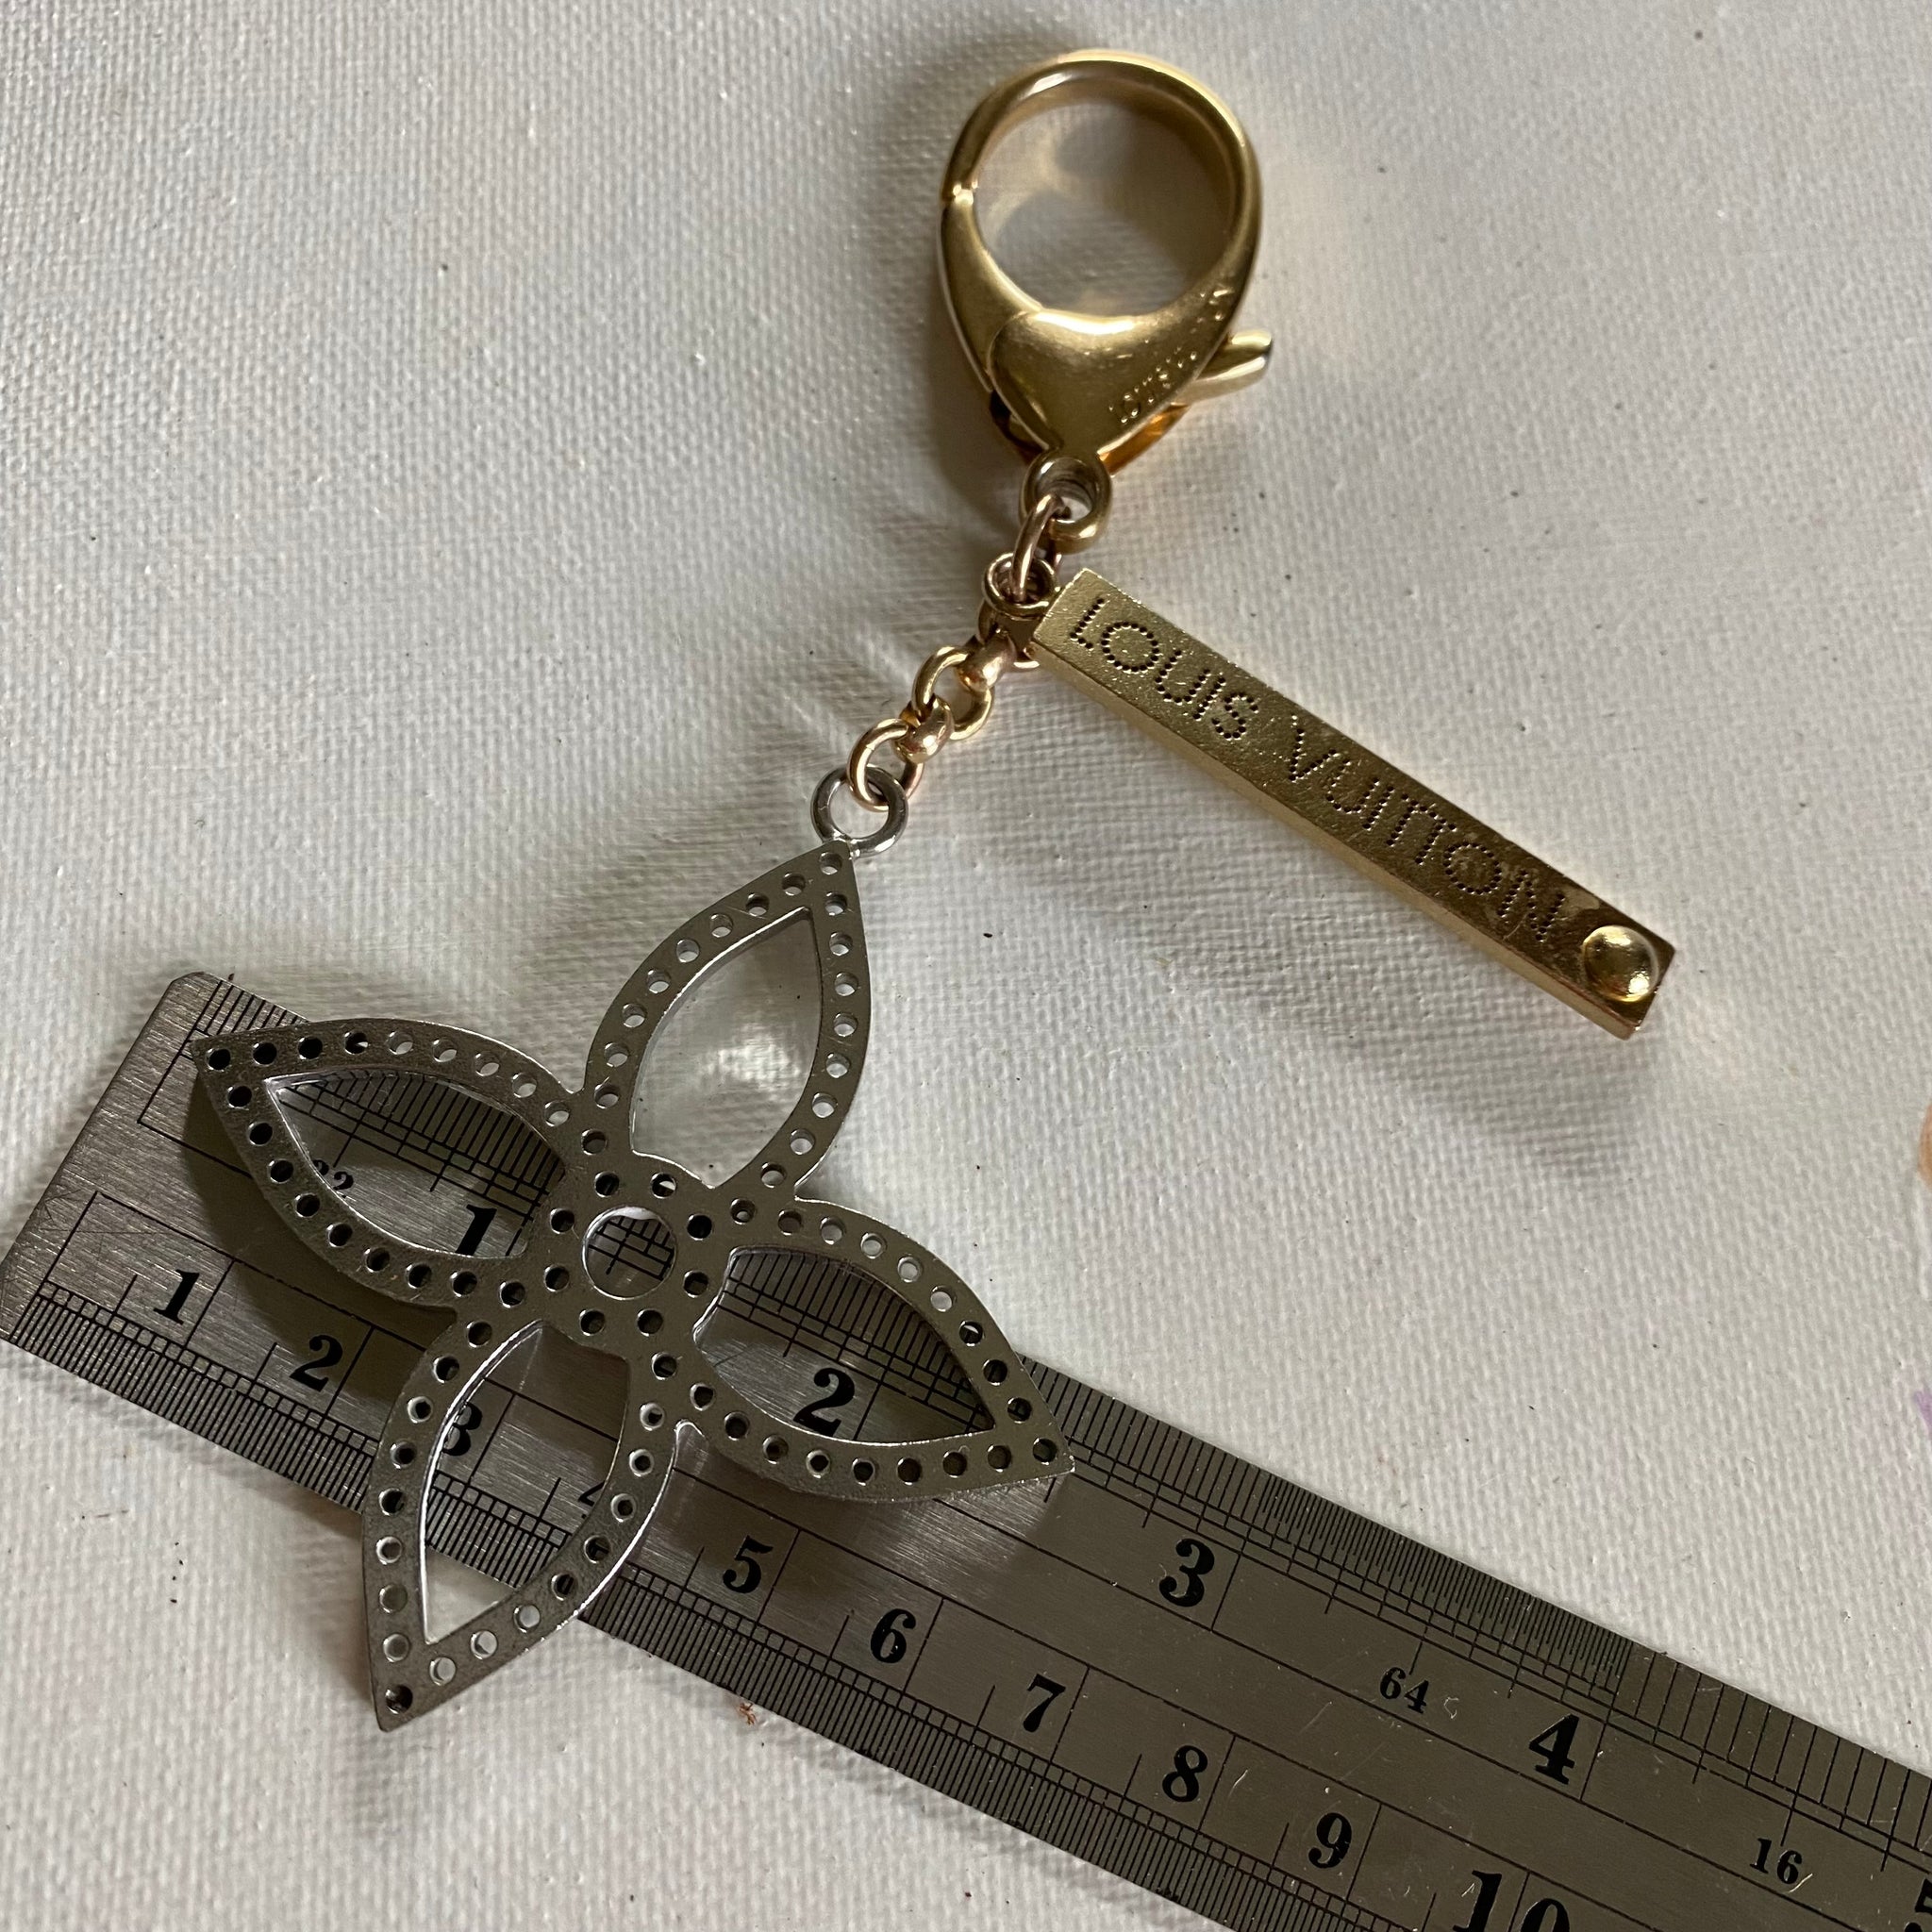 Authentic LV Quatrefoil with tag Purse Charm/Keychain – Beauty